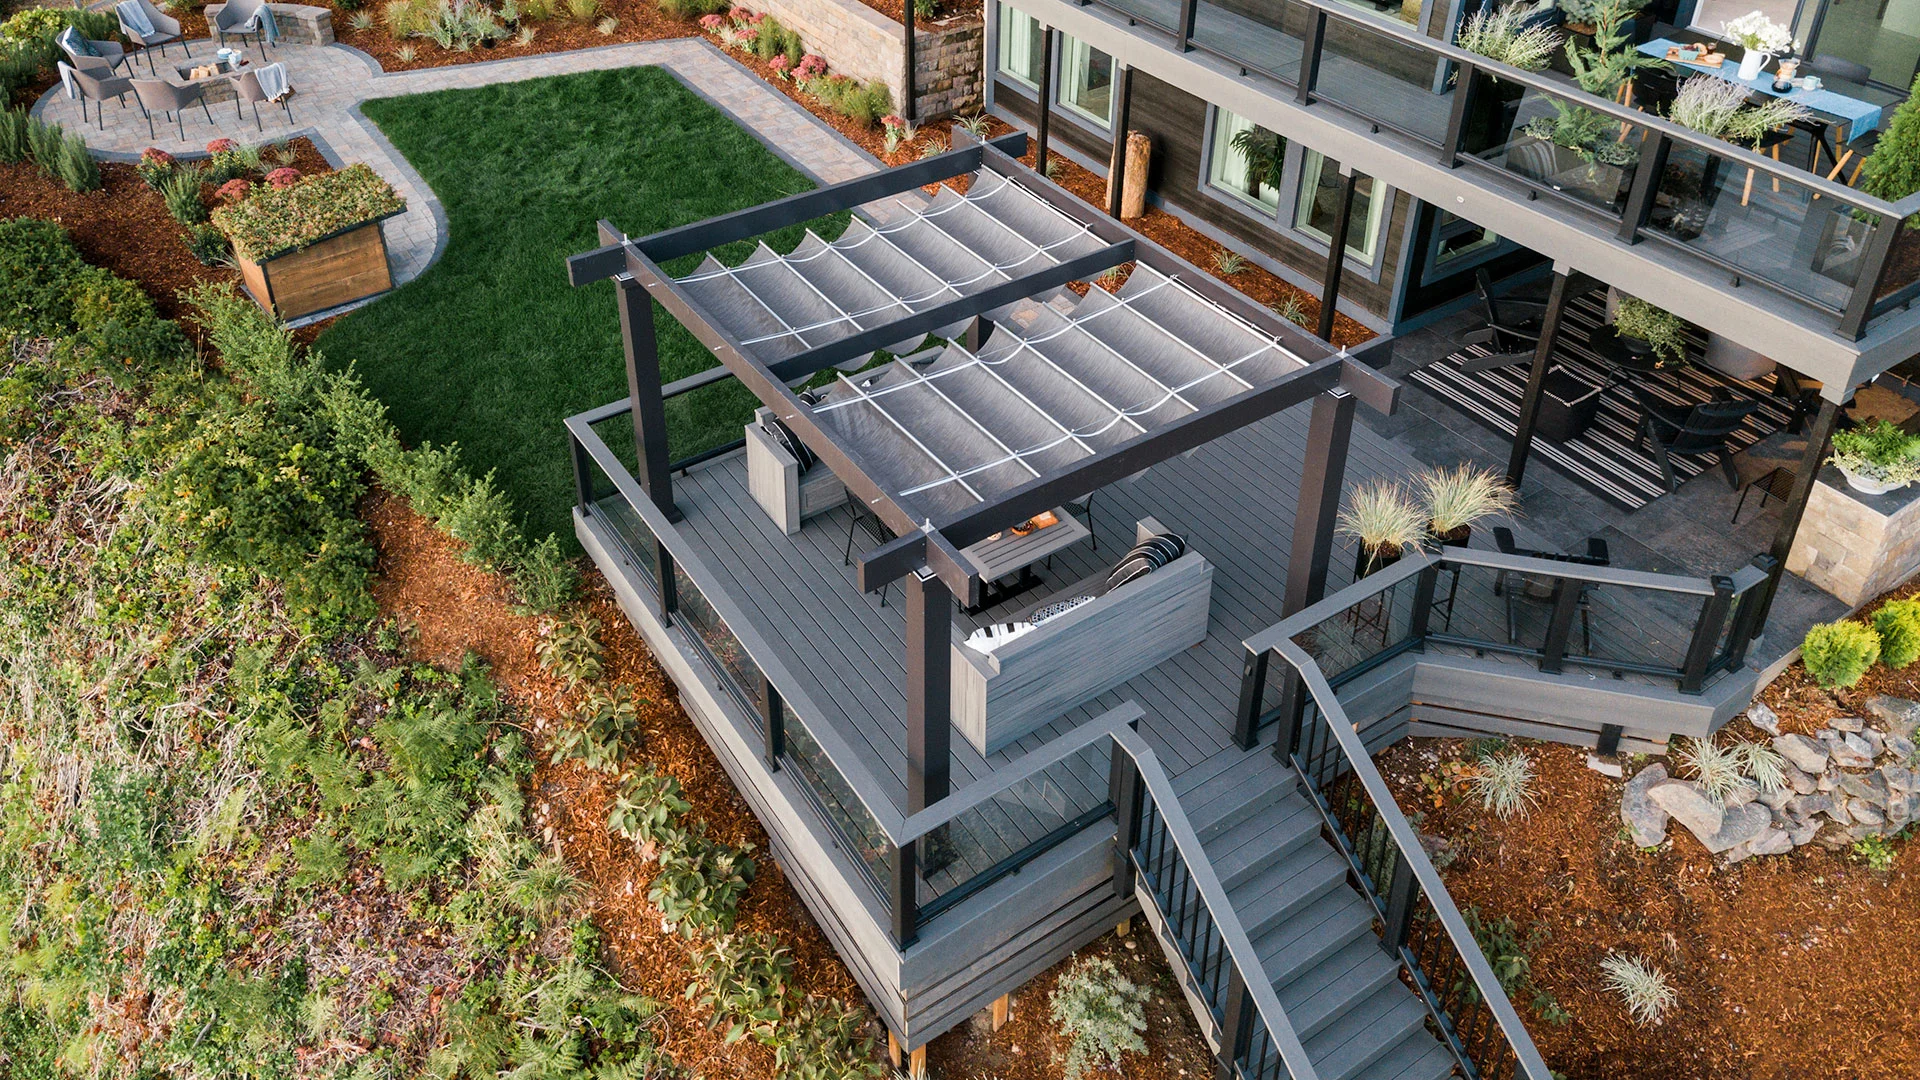 Trex Pergola Vision with retractable canopy HGTV Dream Home